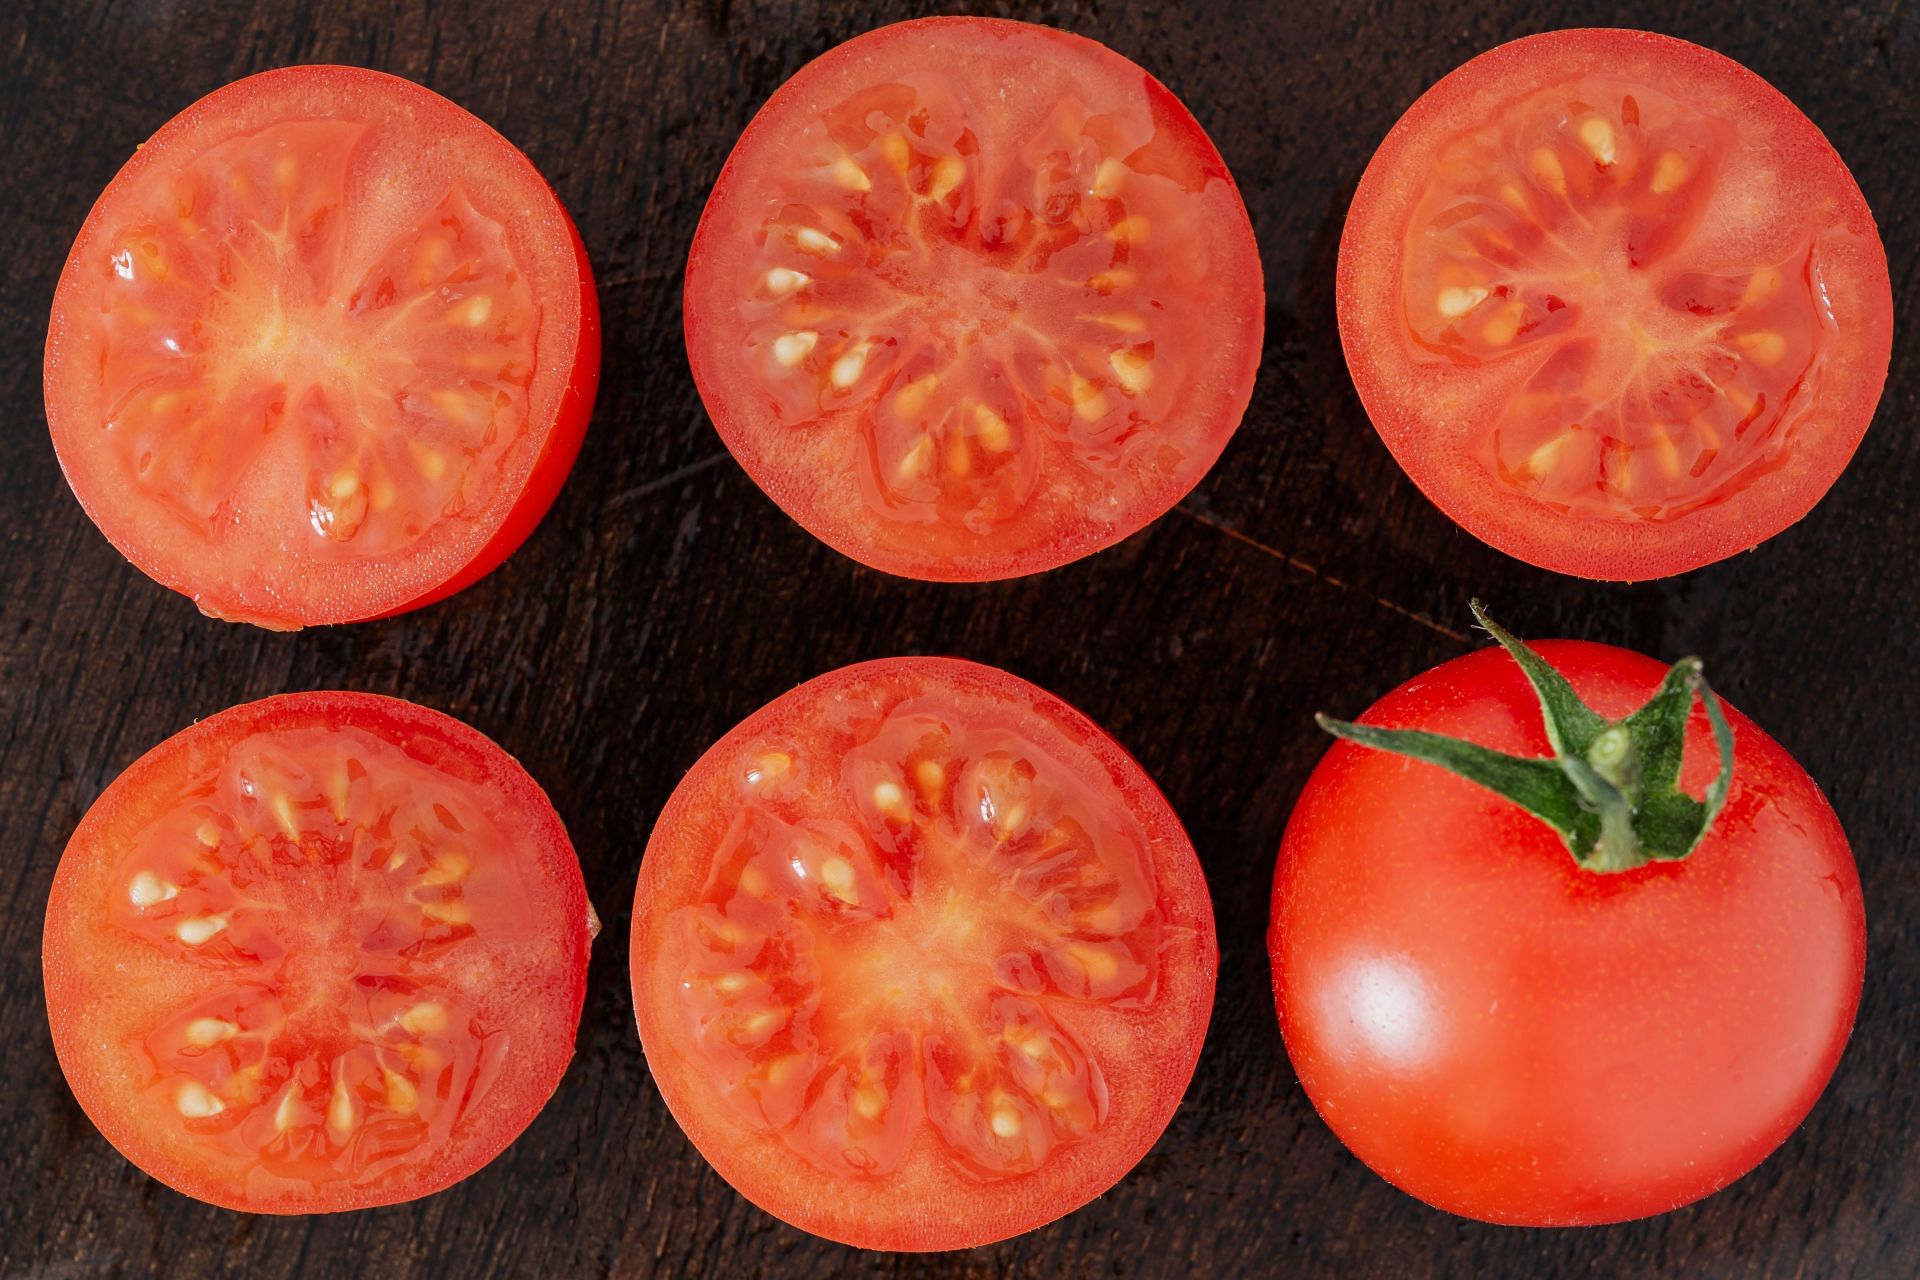 Is it safe to eat tomato seeds? (Image via pexels / karolina grabowska)